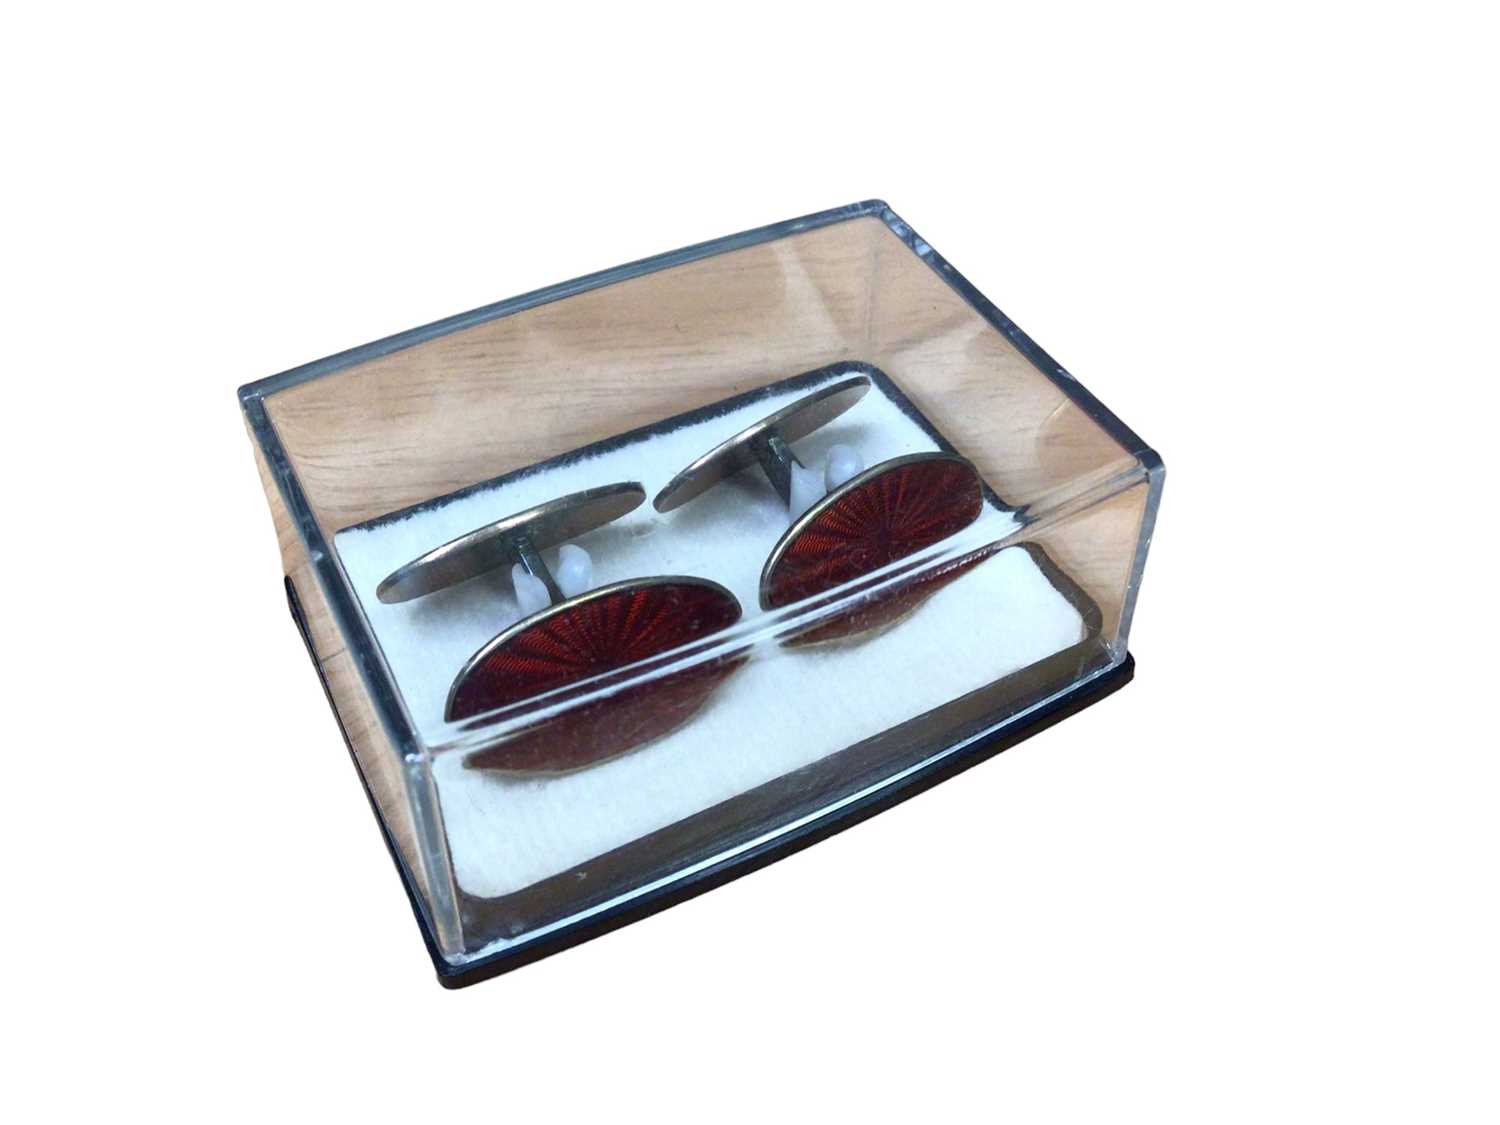 Pair of David Andersen Norwegian silver gilt and red guilloché enamel cufflinks in original box - Image 5 of 6